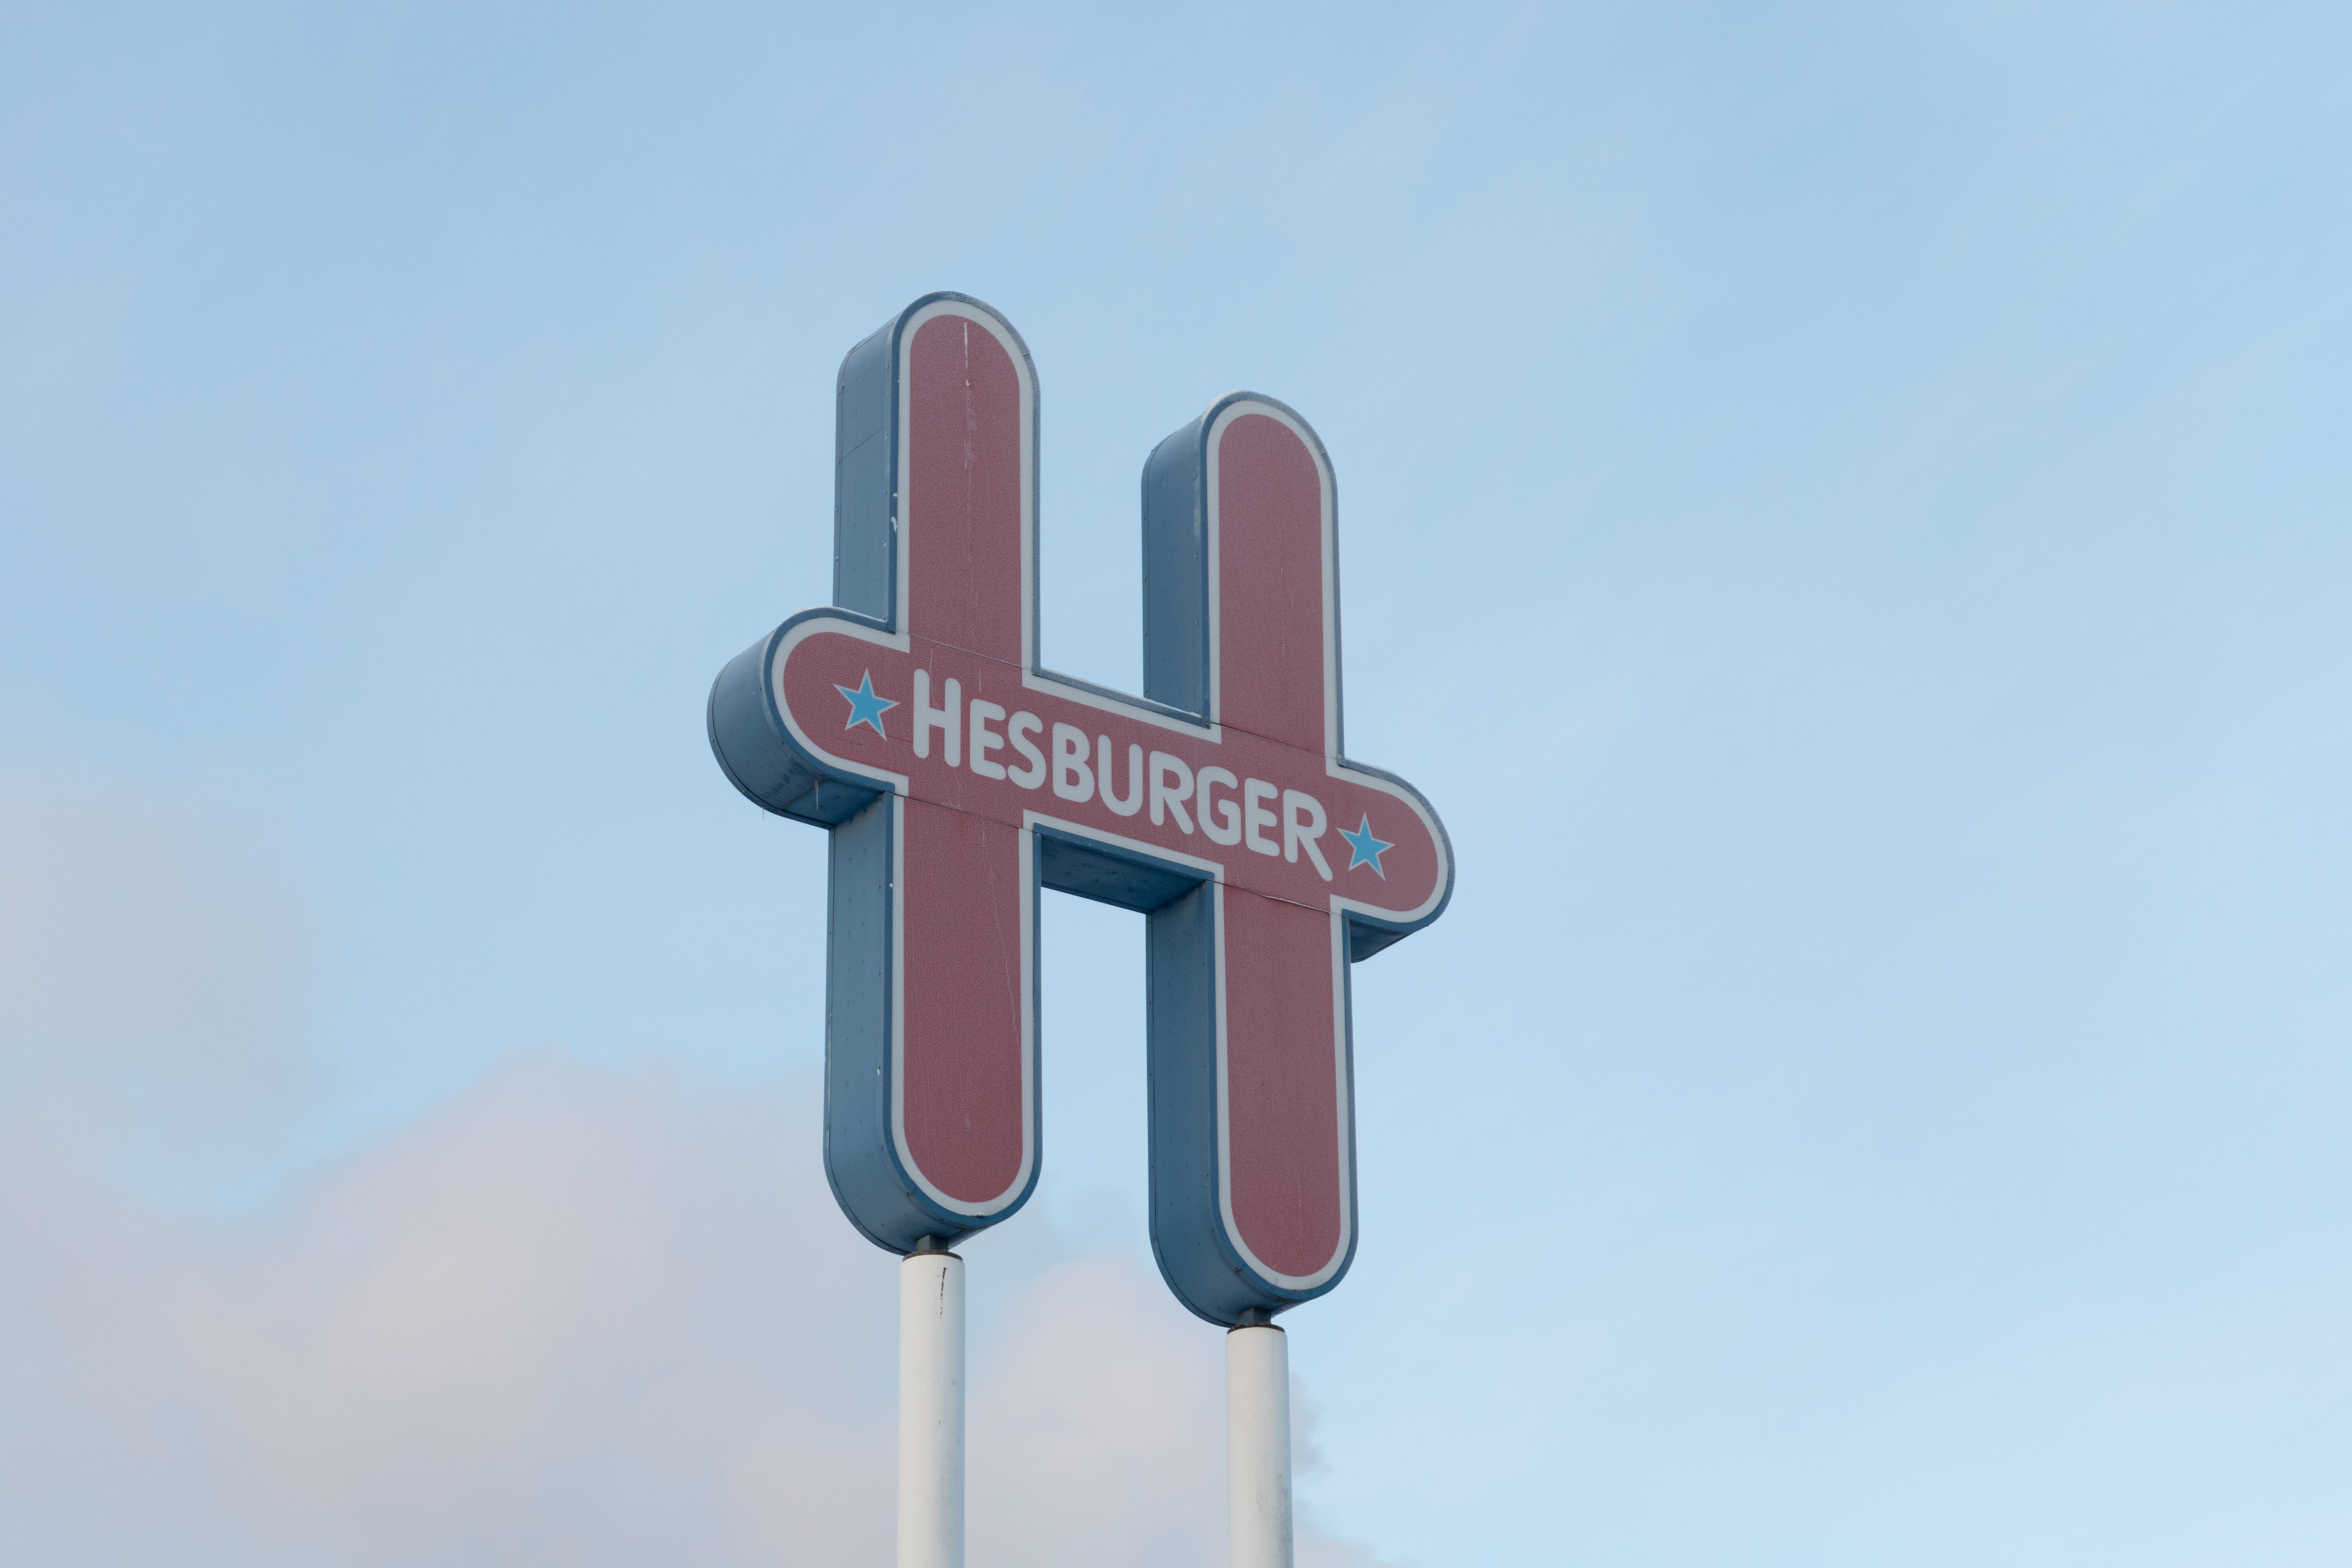 Hesburger opens its restaurant in Ukraine again